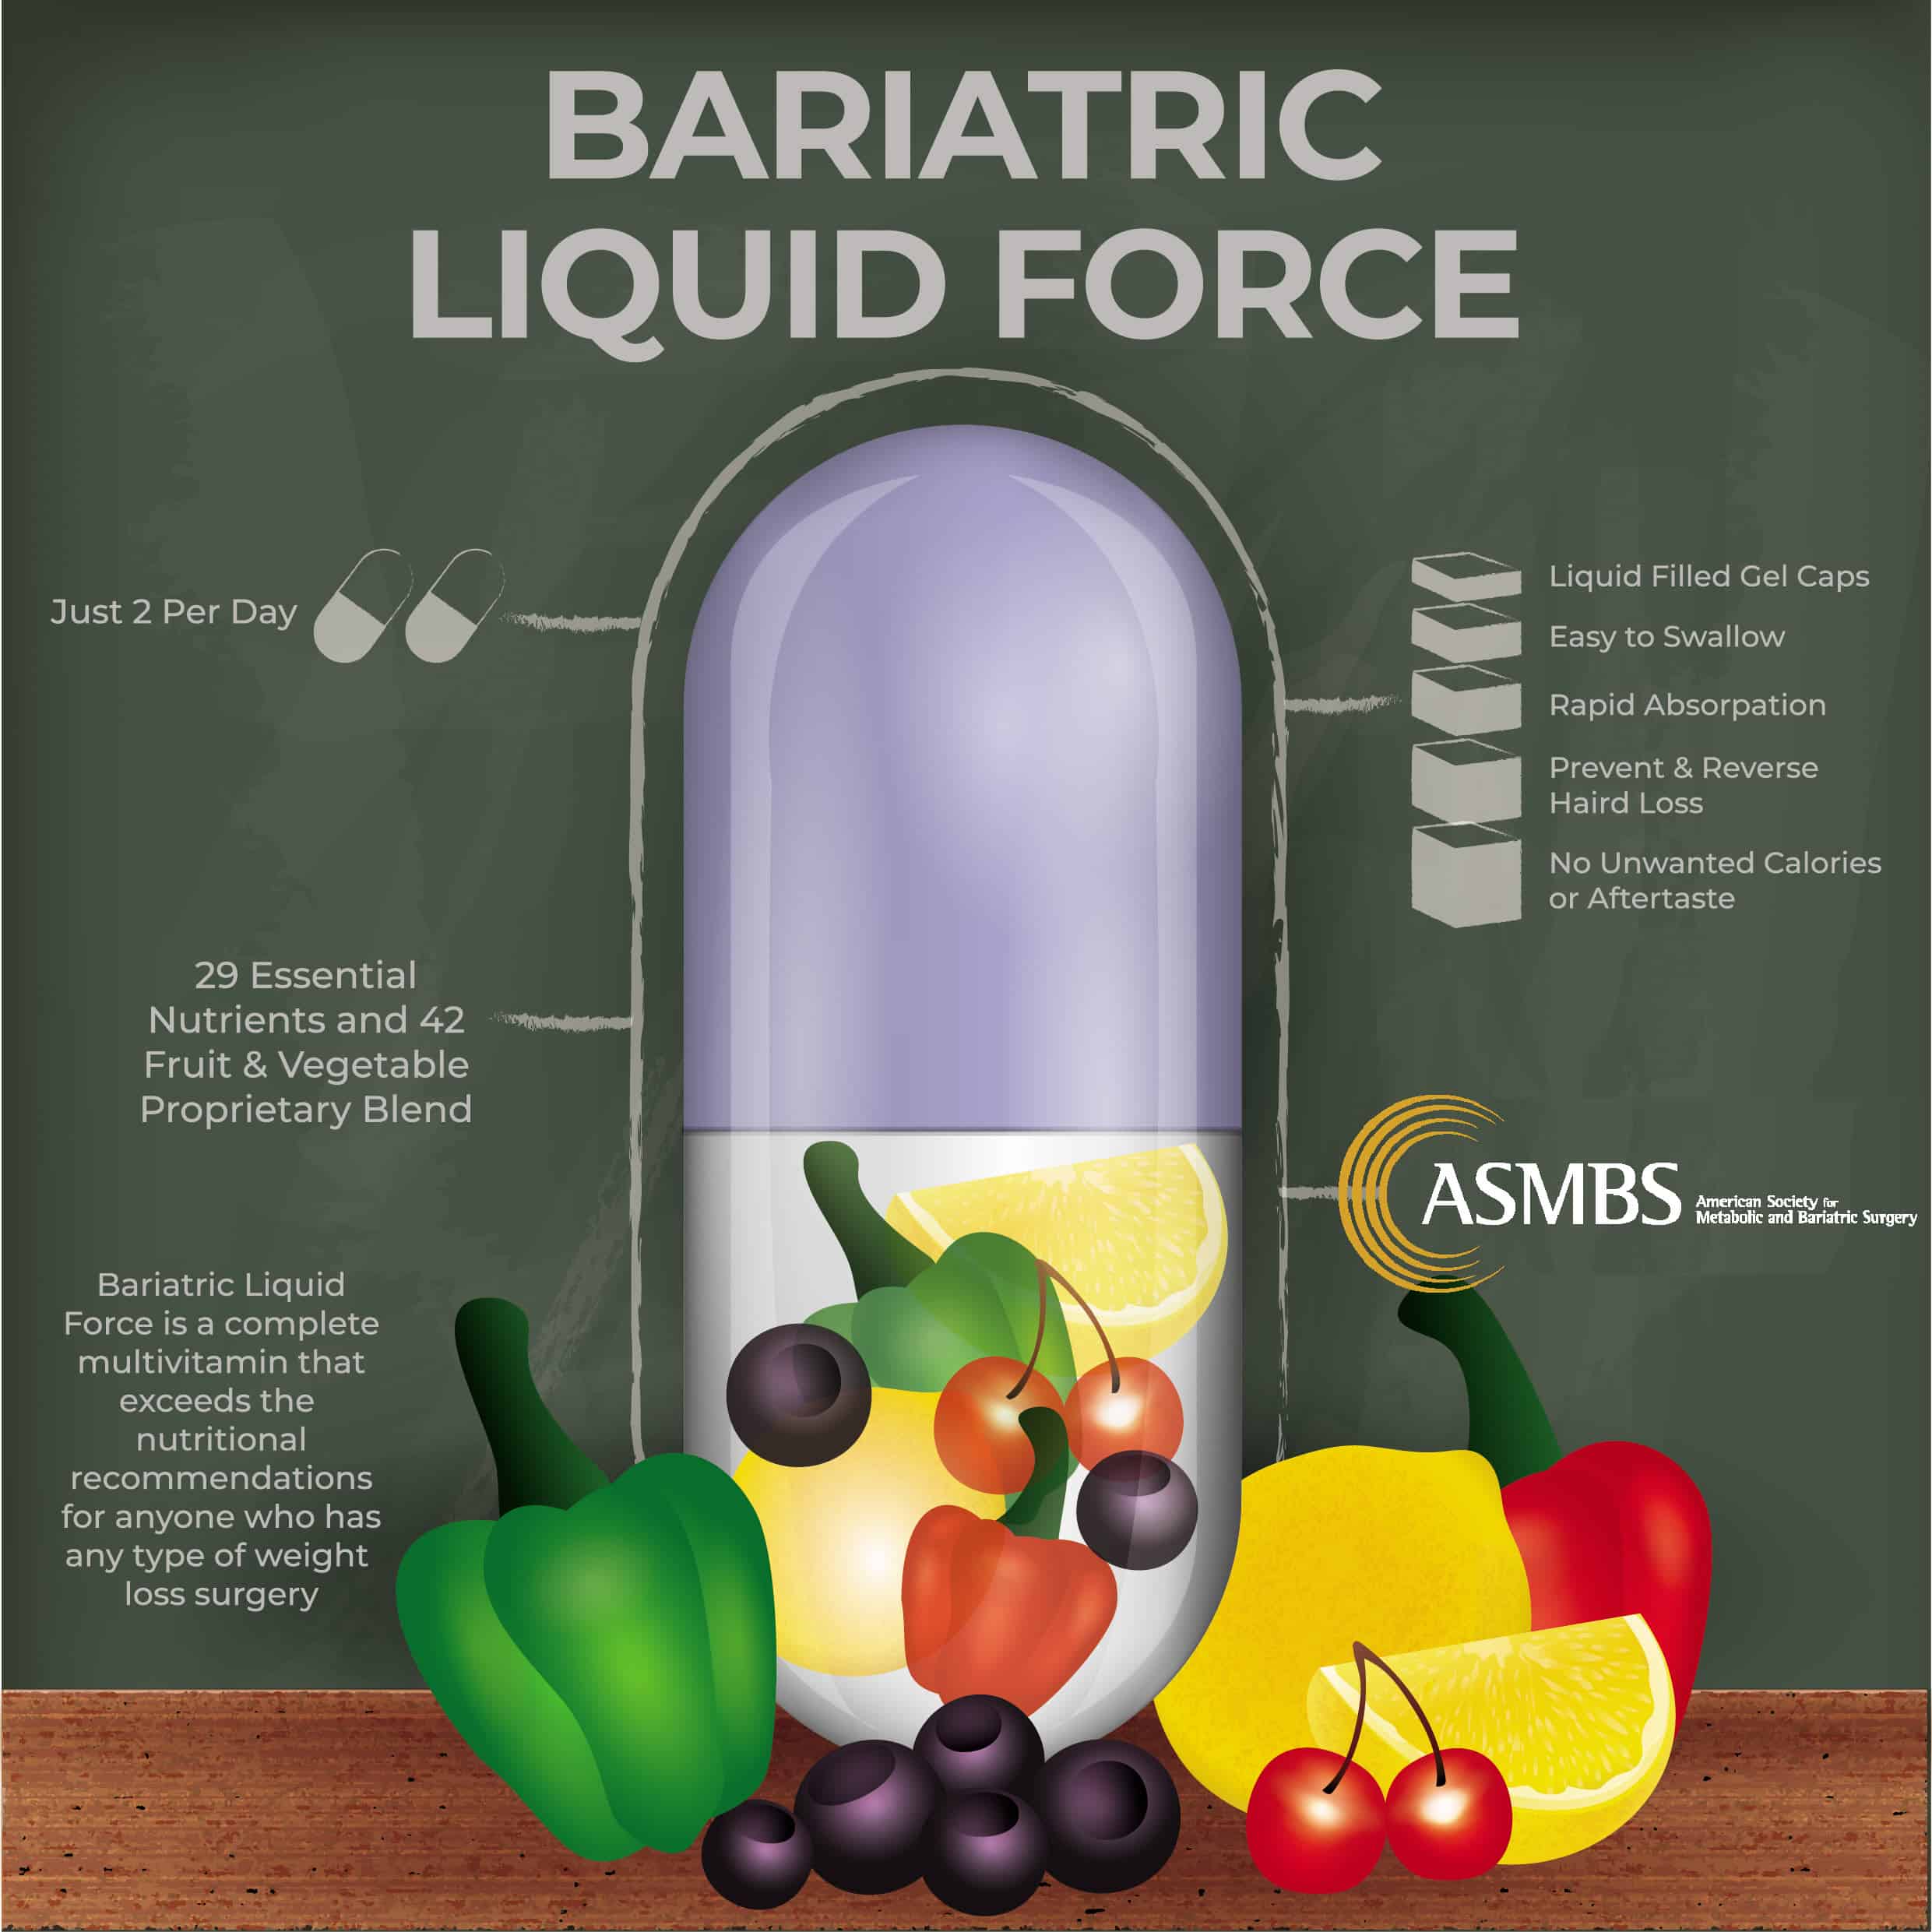 Best Bariatric Vitamins